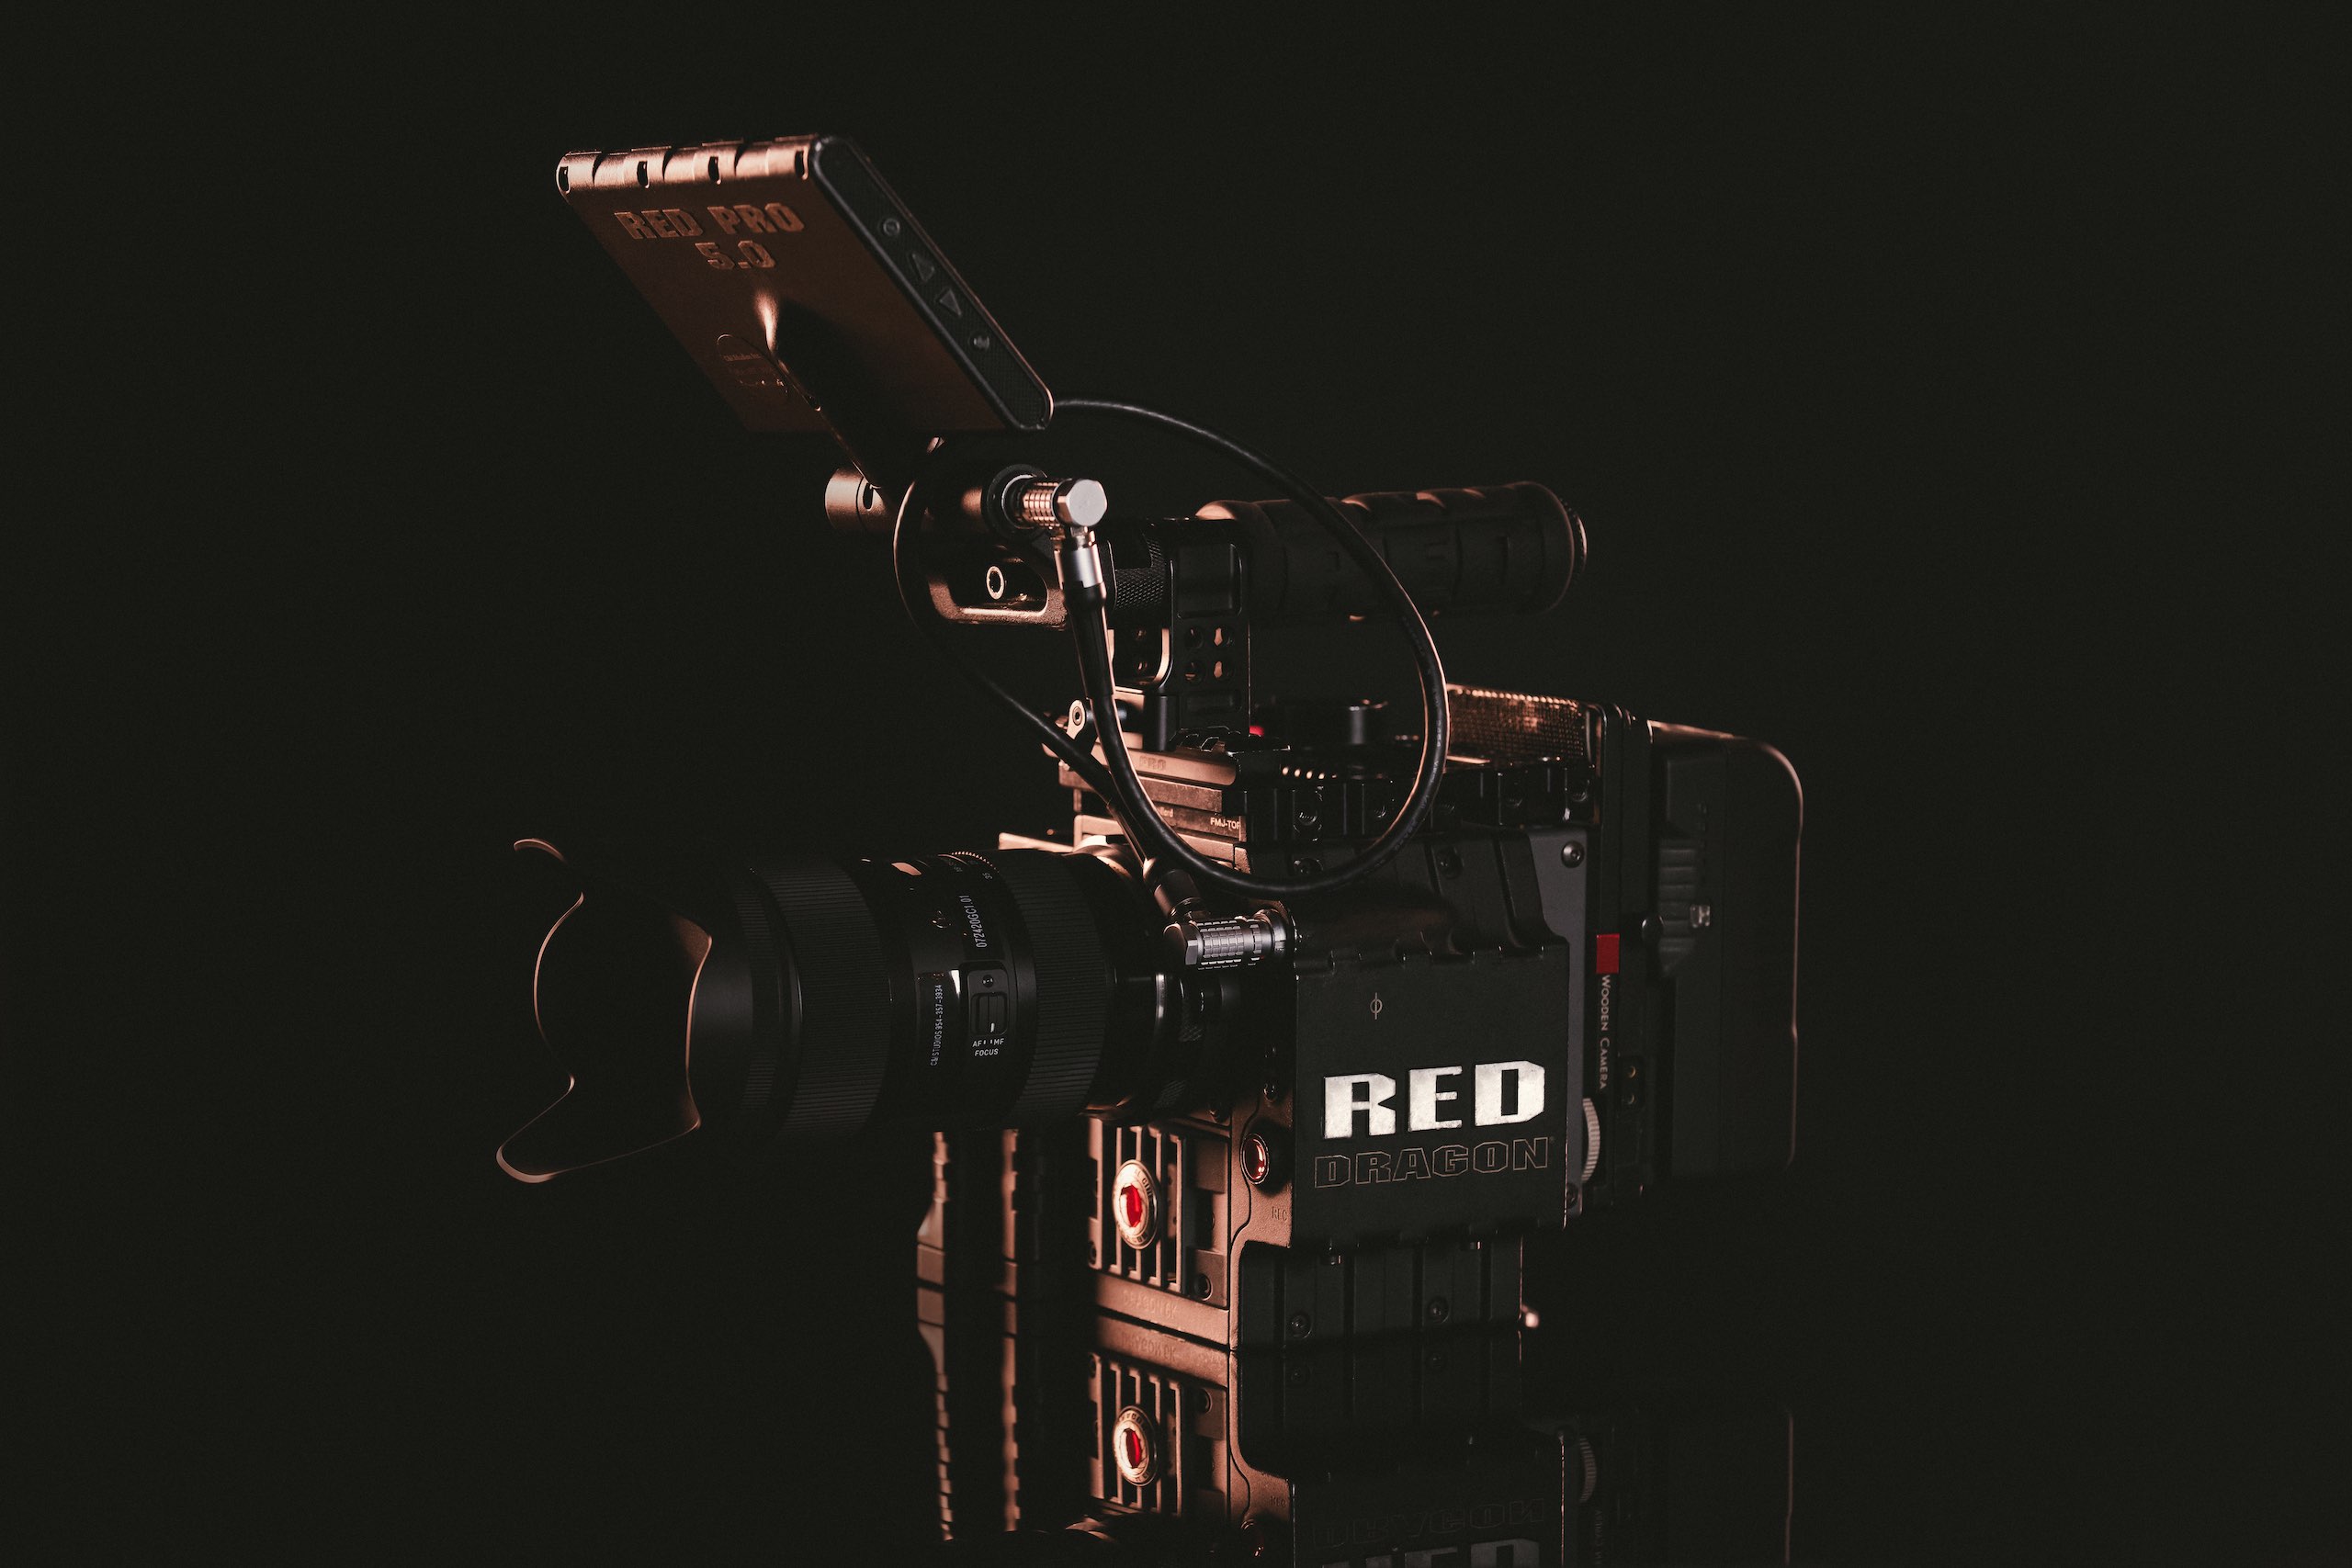 IU RED 5k Scarlet Dragon Cinema Camera for rent on display